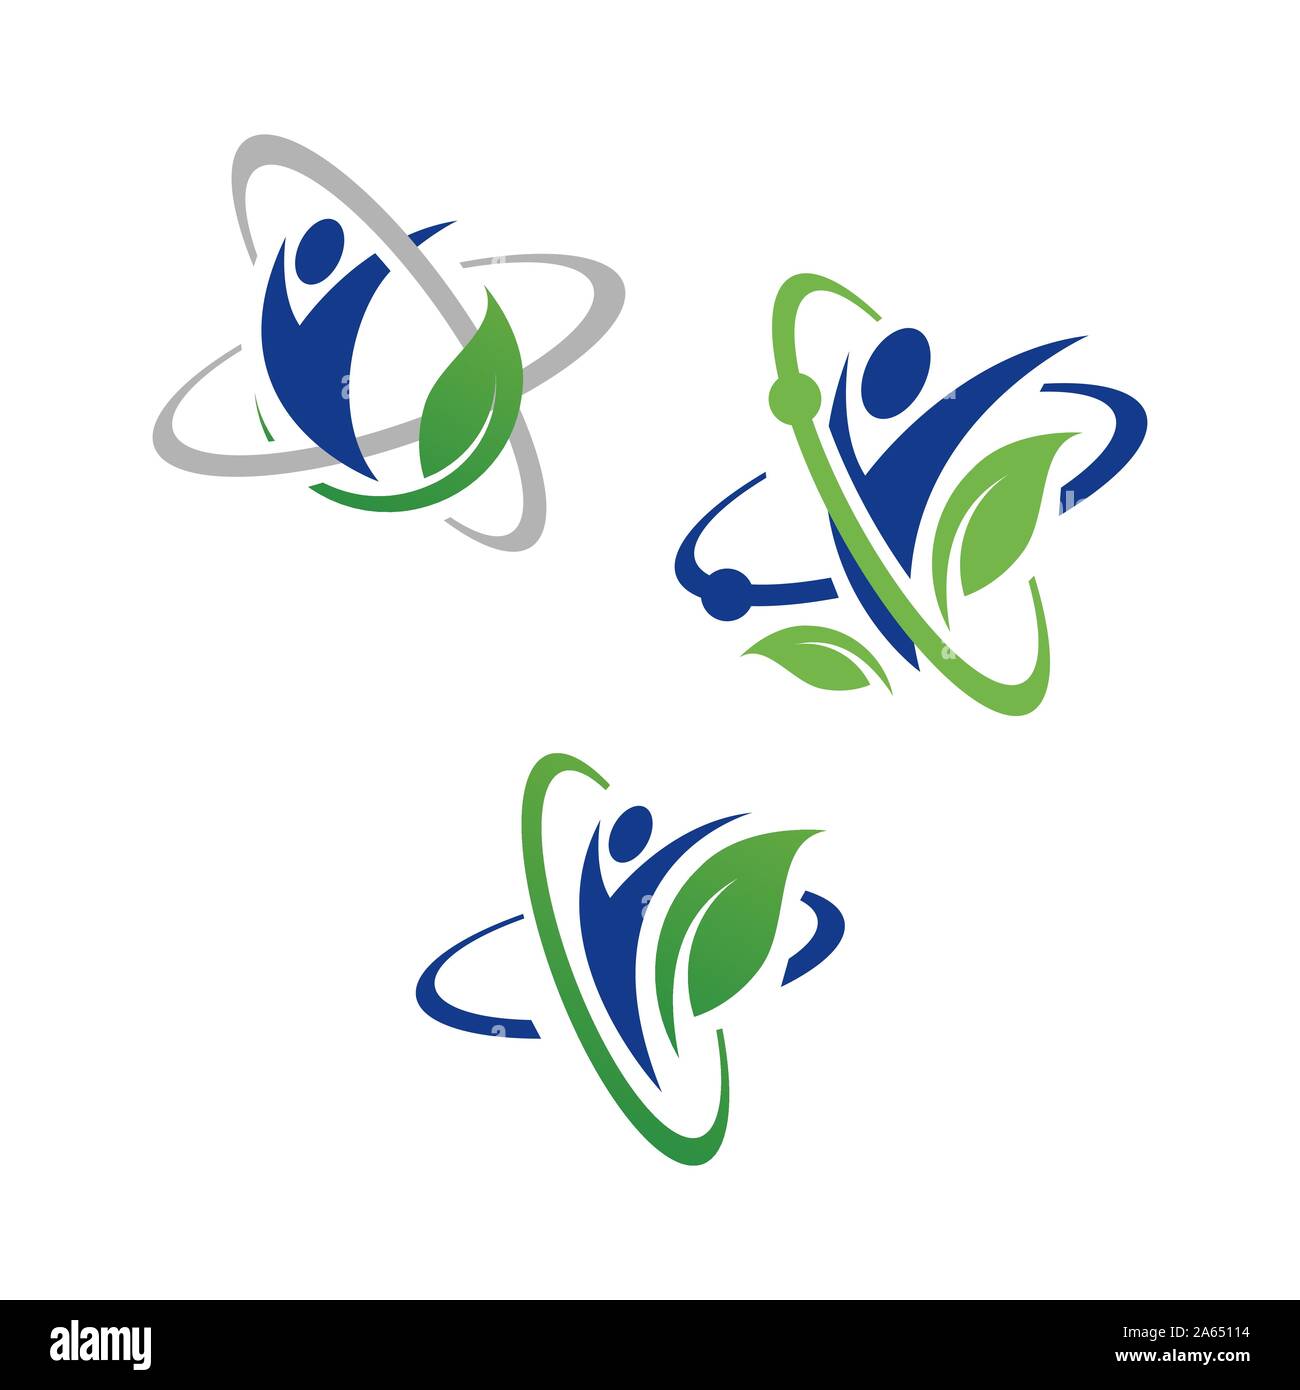 nutrition logo design vector icon science symbol and healthy people illustration Stock Vector